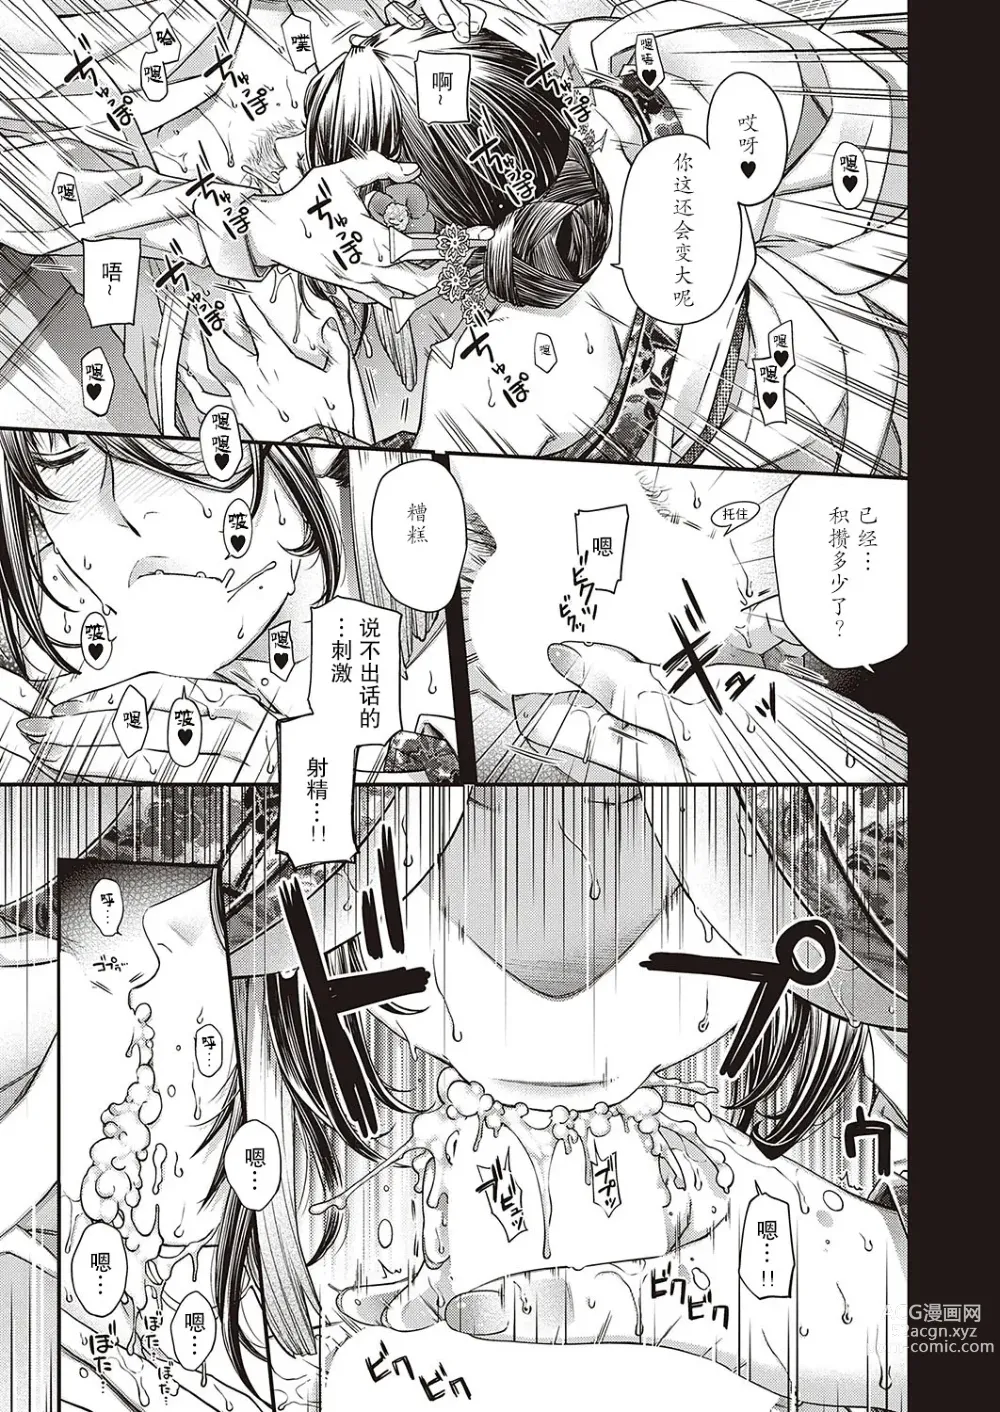 Page 7 of manga Keikoku no Kemono